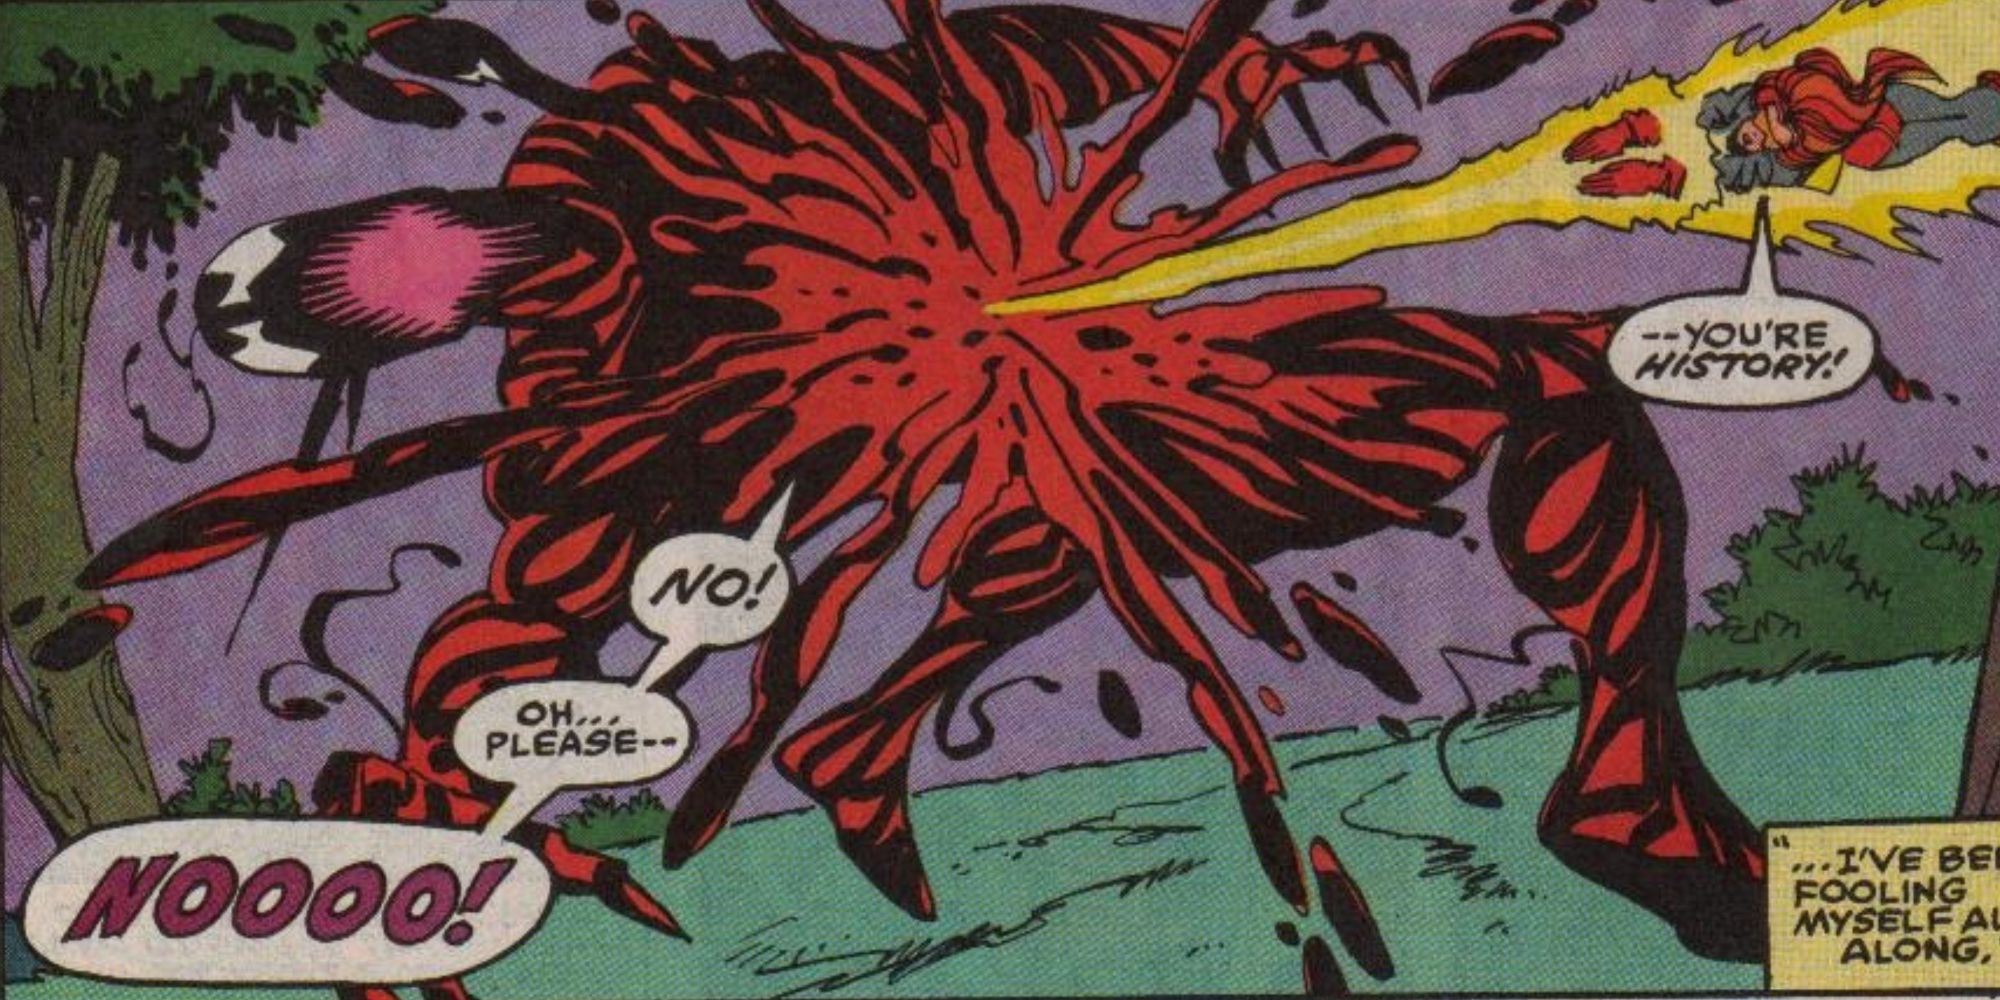 Firestar blasts Carnage in Marvel Comics.